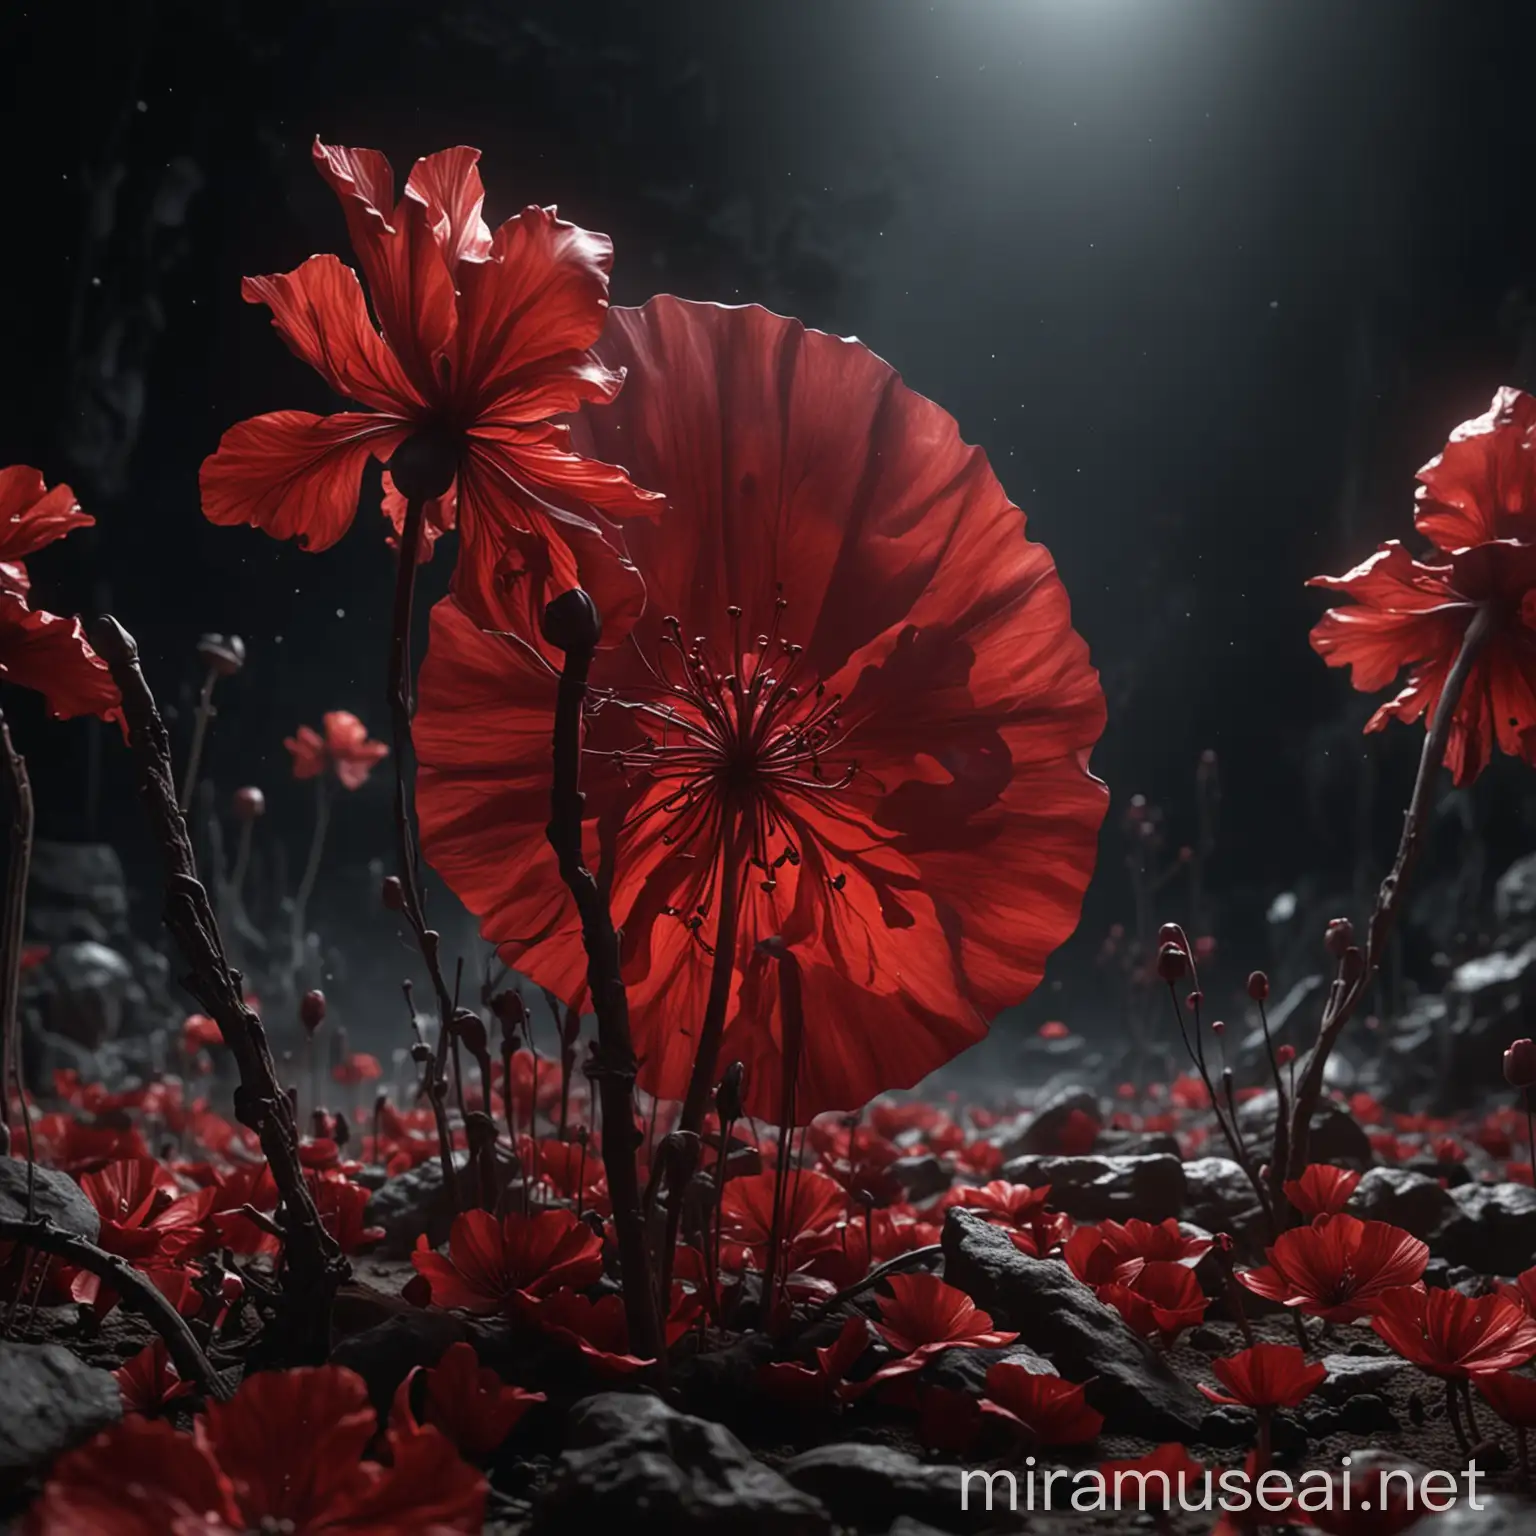 Calypso Mythology in Red Dark Atmosphere Photorealistic 4K Opium Mystery